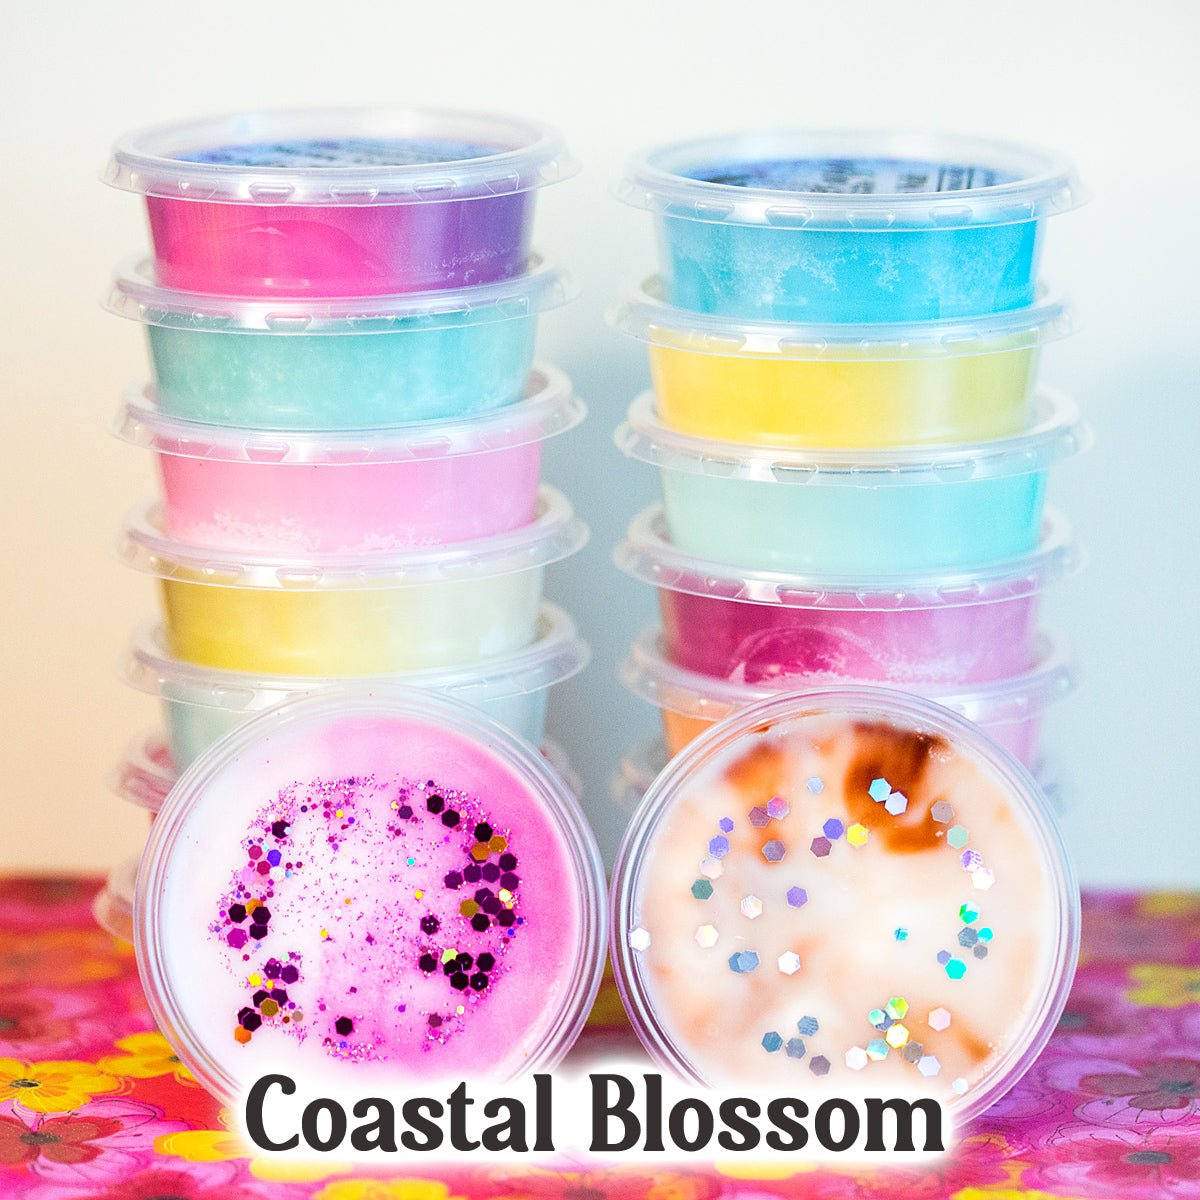 Coastal Blossom - Wachs Melt Scent Cup